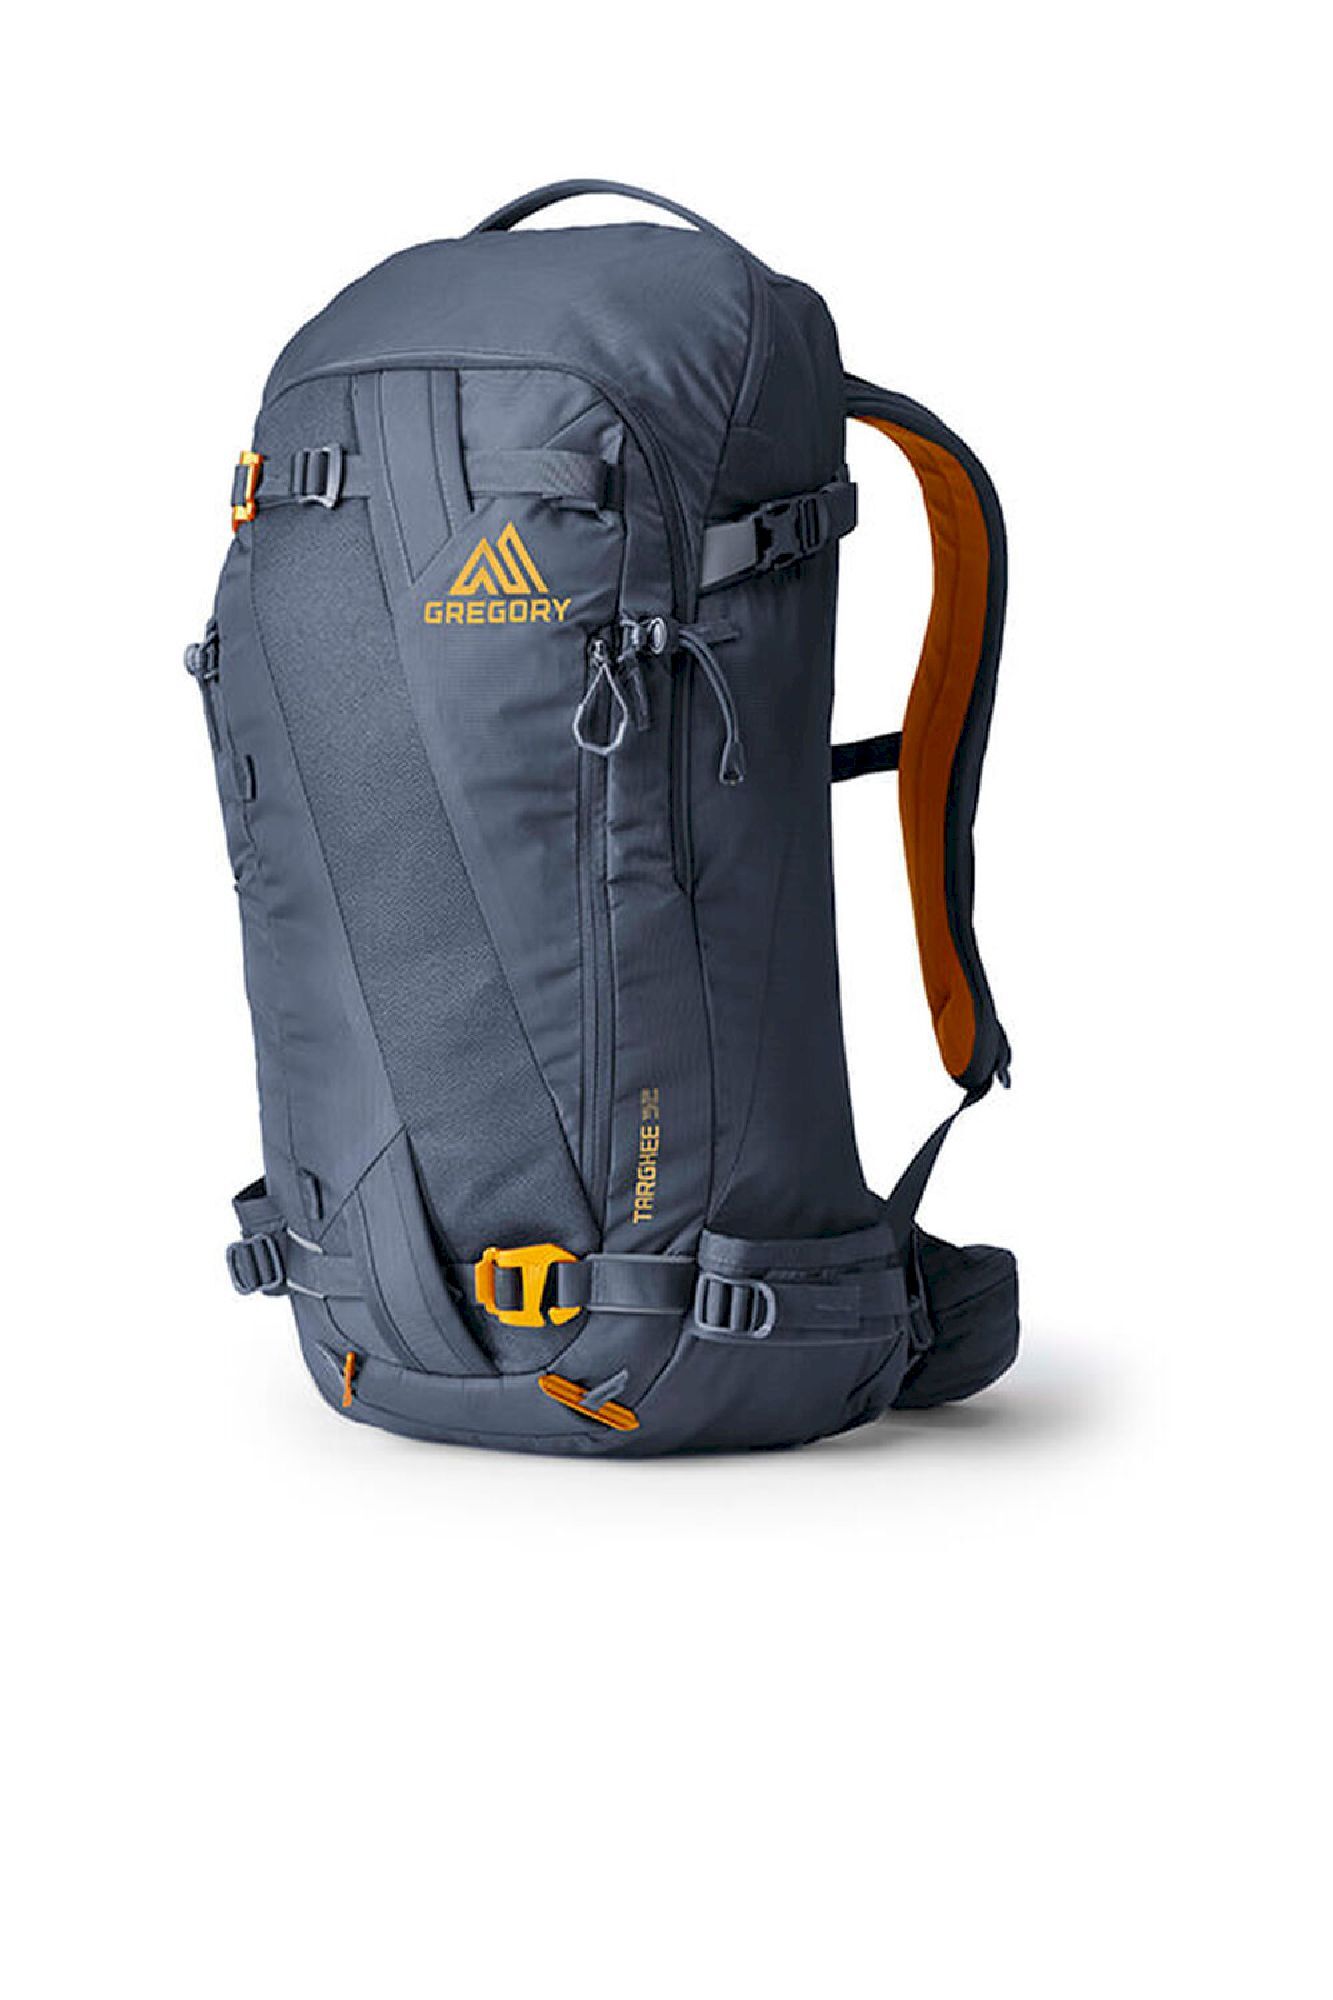 Gregory Targhee 32 - Ski Touring backpack